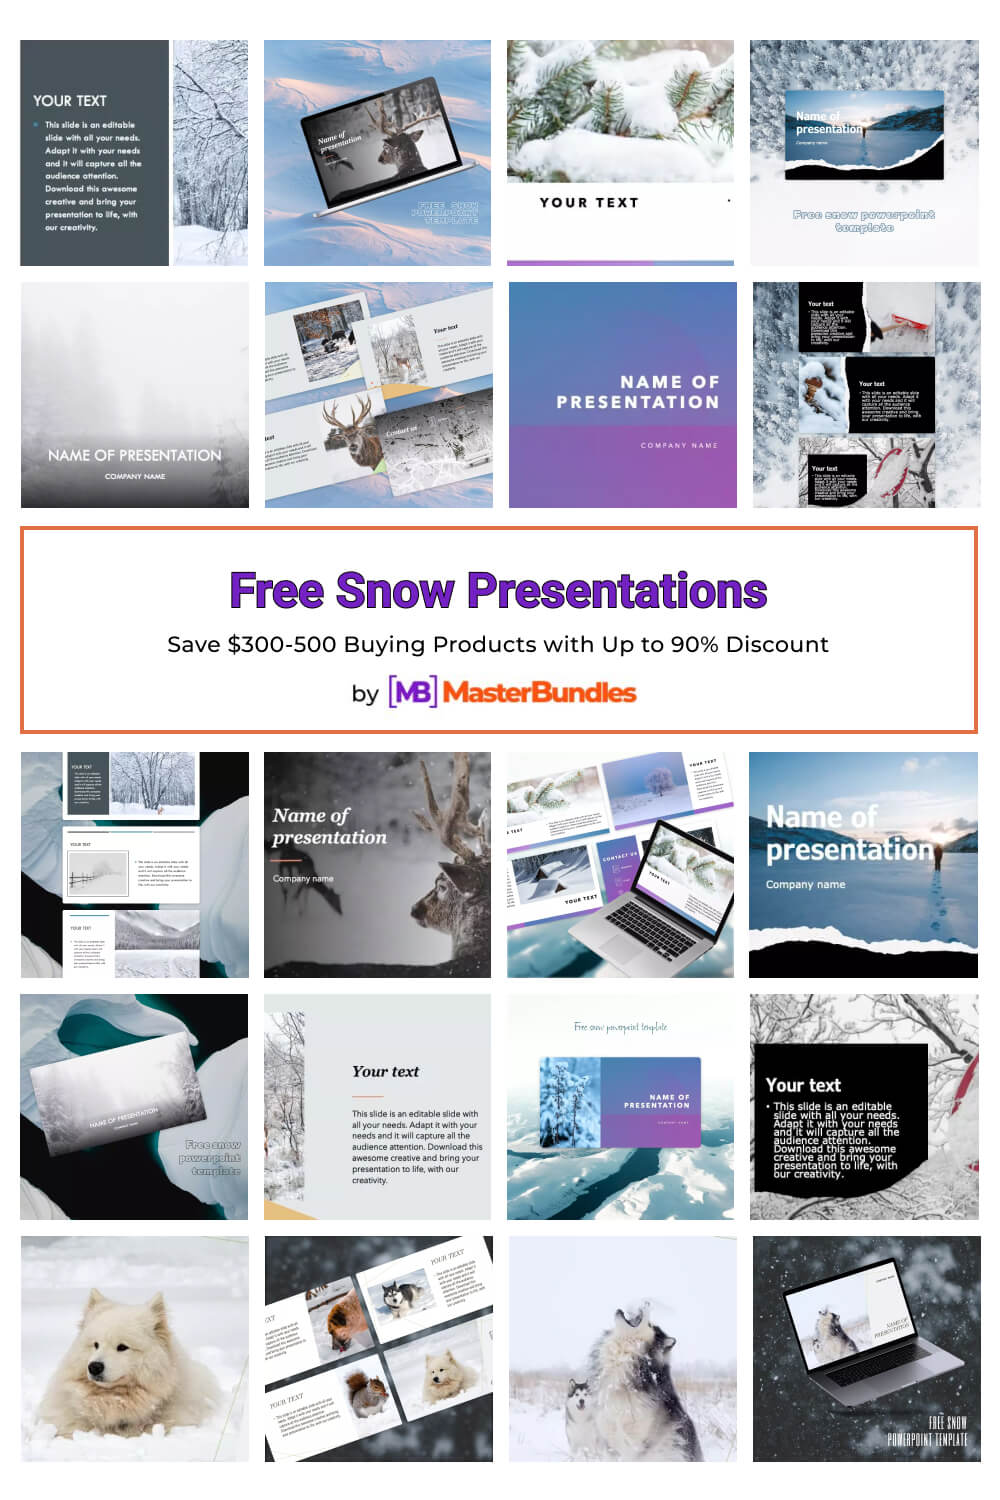 free snow presentations pinterest image.